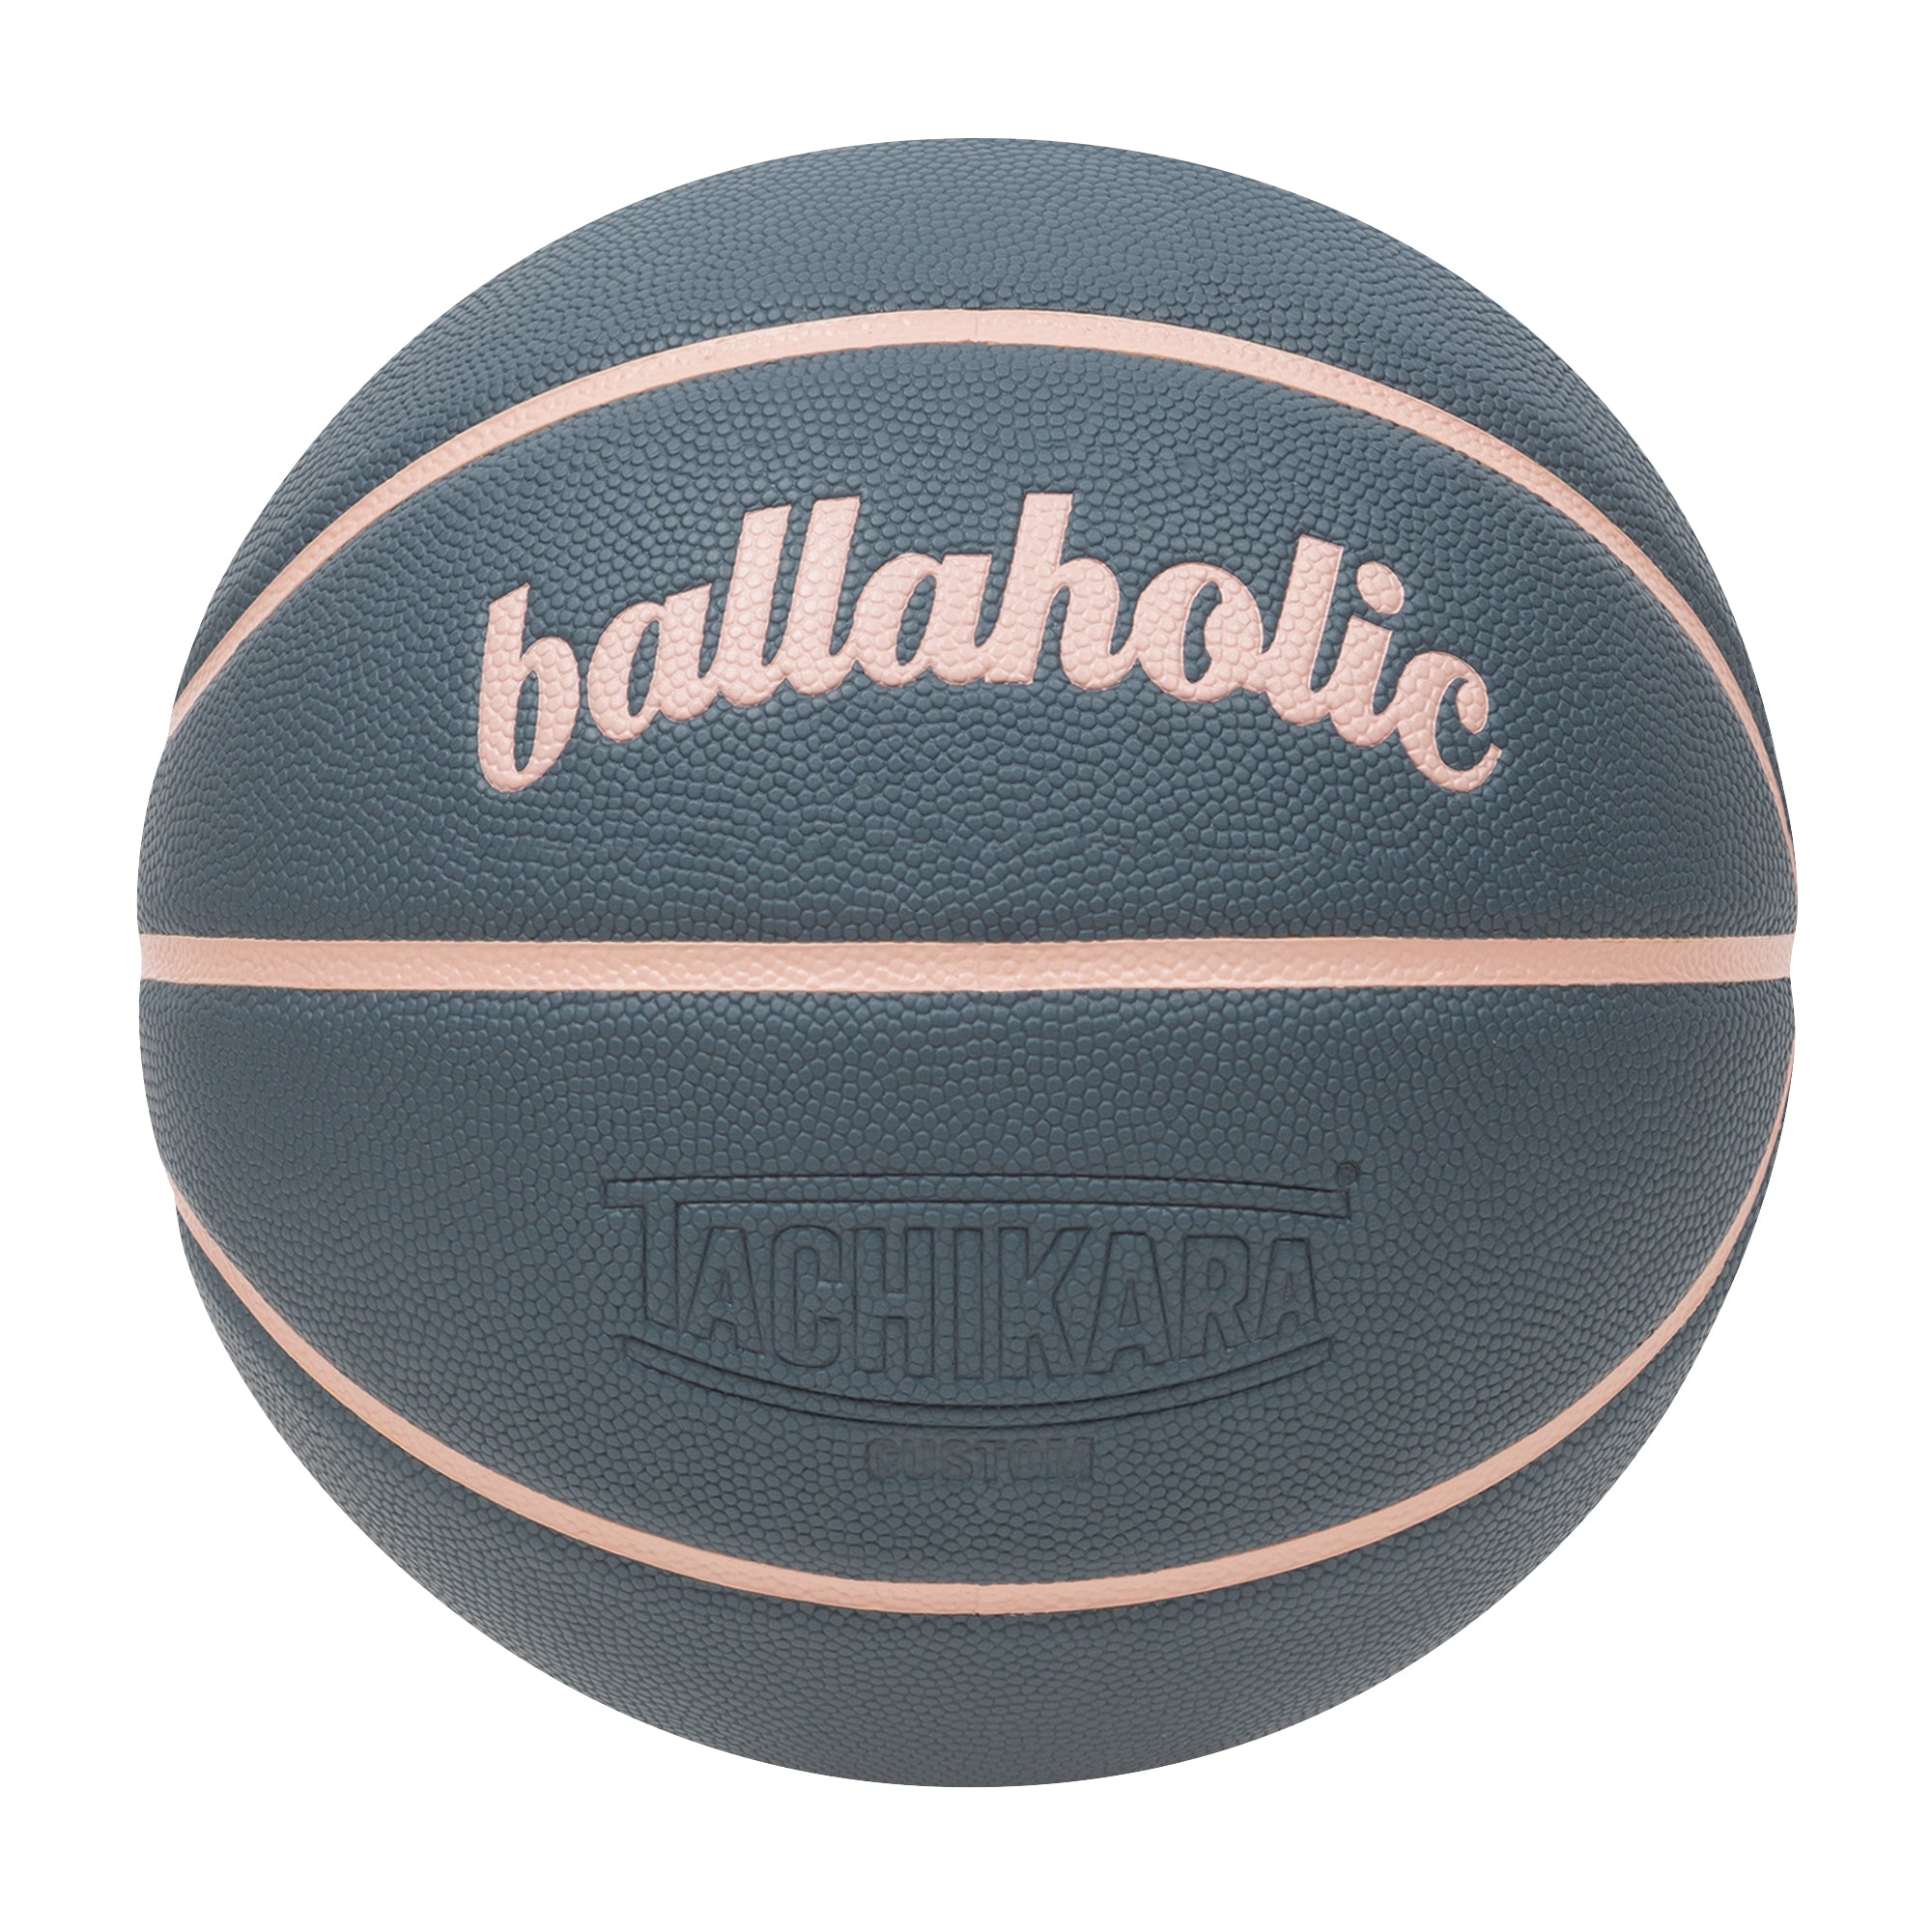 Playground Basketball / ballaholic x TACHIKARA (slate blue/pink) 6 –  ballaholicオンラインショップ